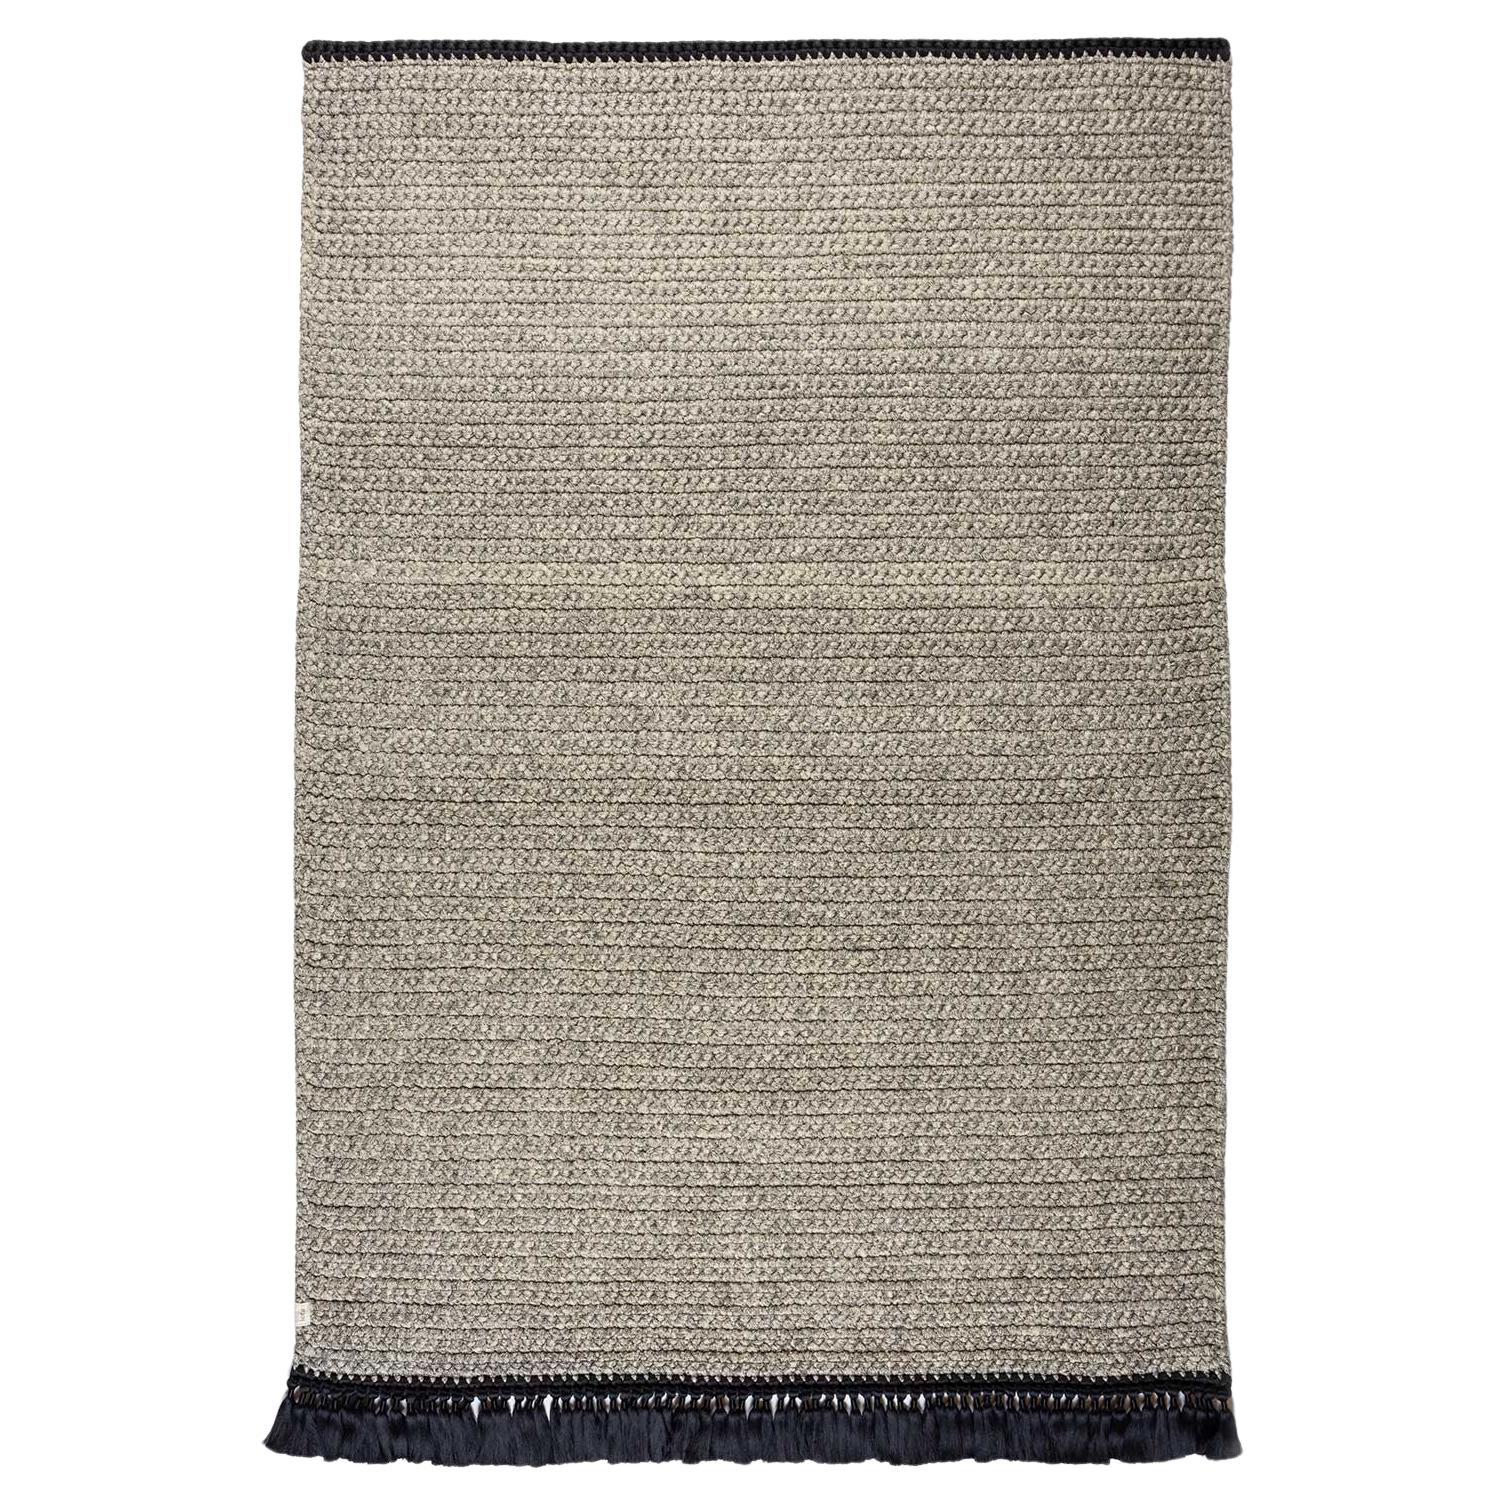 Handmade Crochet Thick Rug 170x240 cm in Grey Beige Black Colors